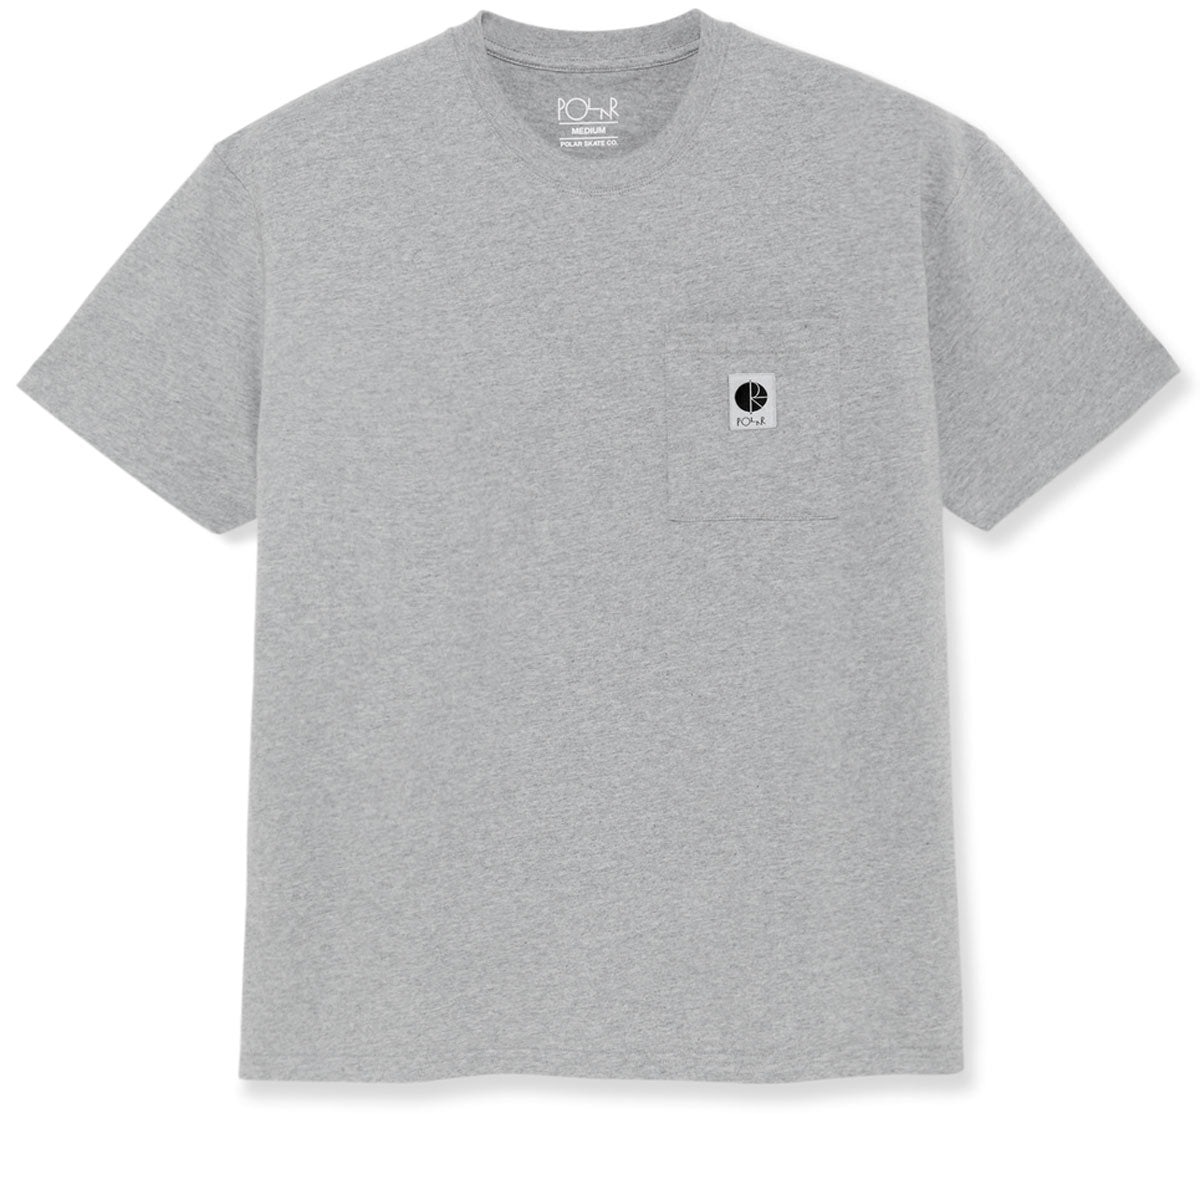 Polar Pocket T-Shirt - Heather Grey image 1